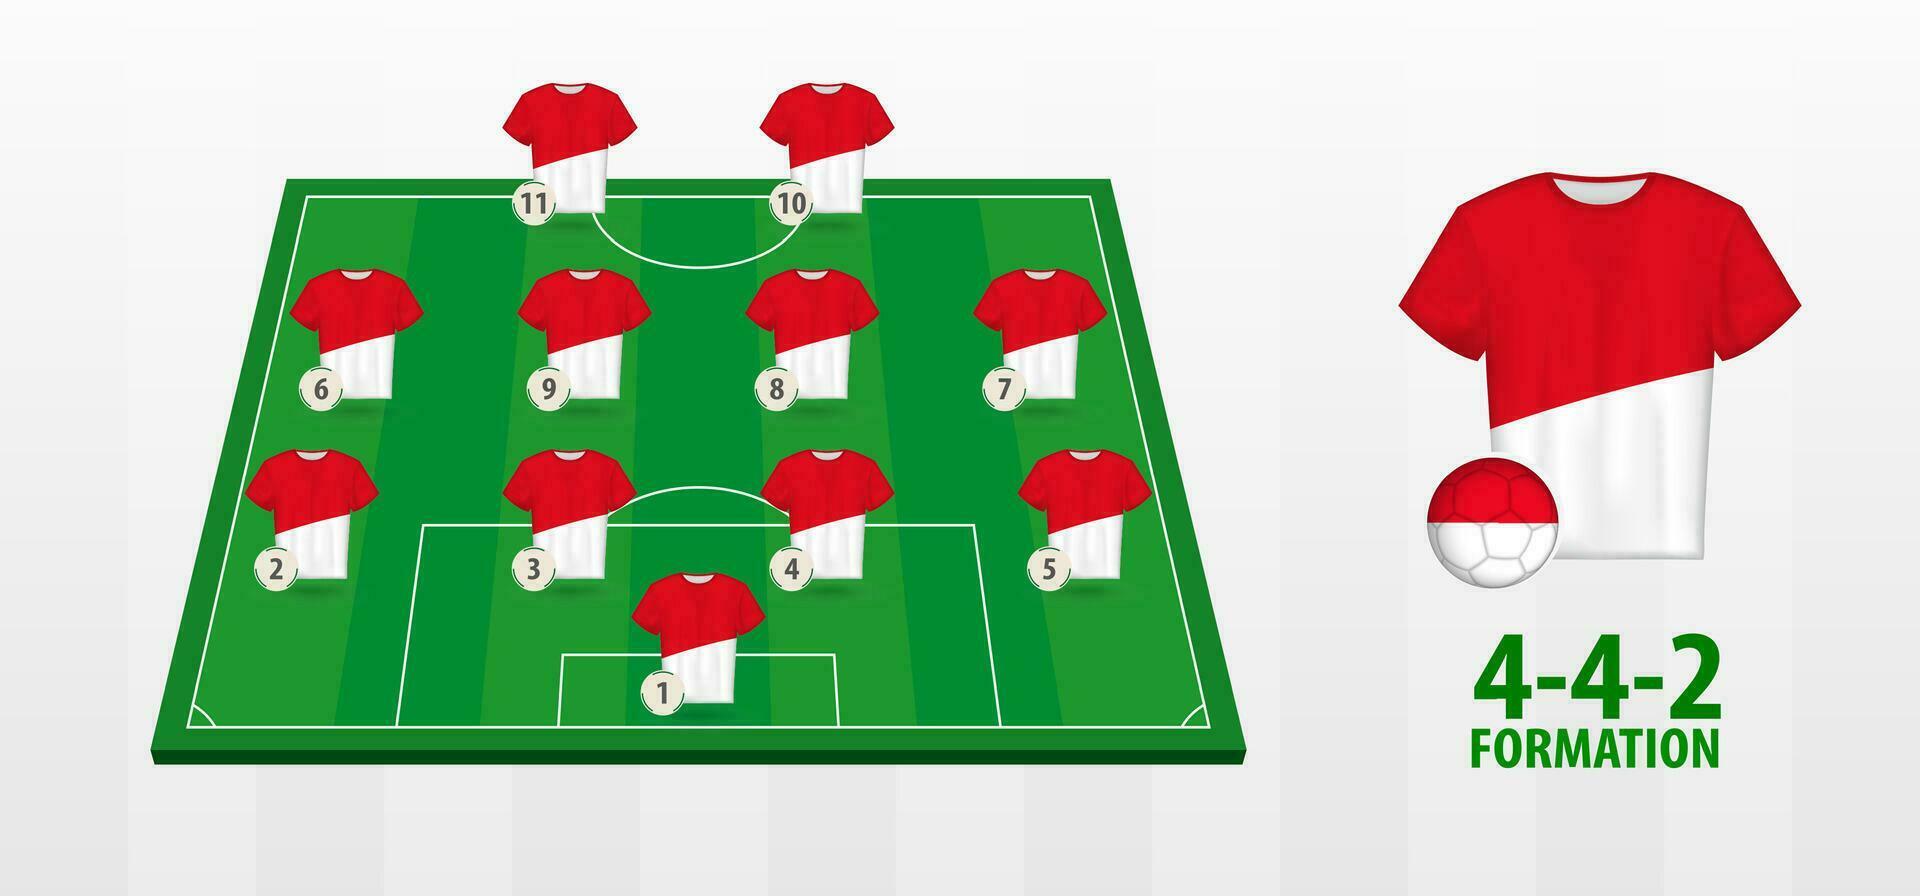 Monaco National Football Team Formation on Football Field. vector